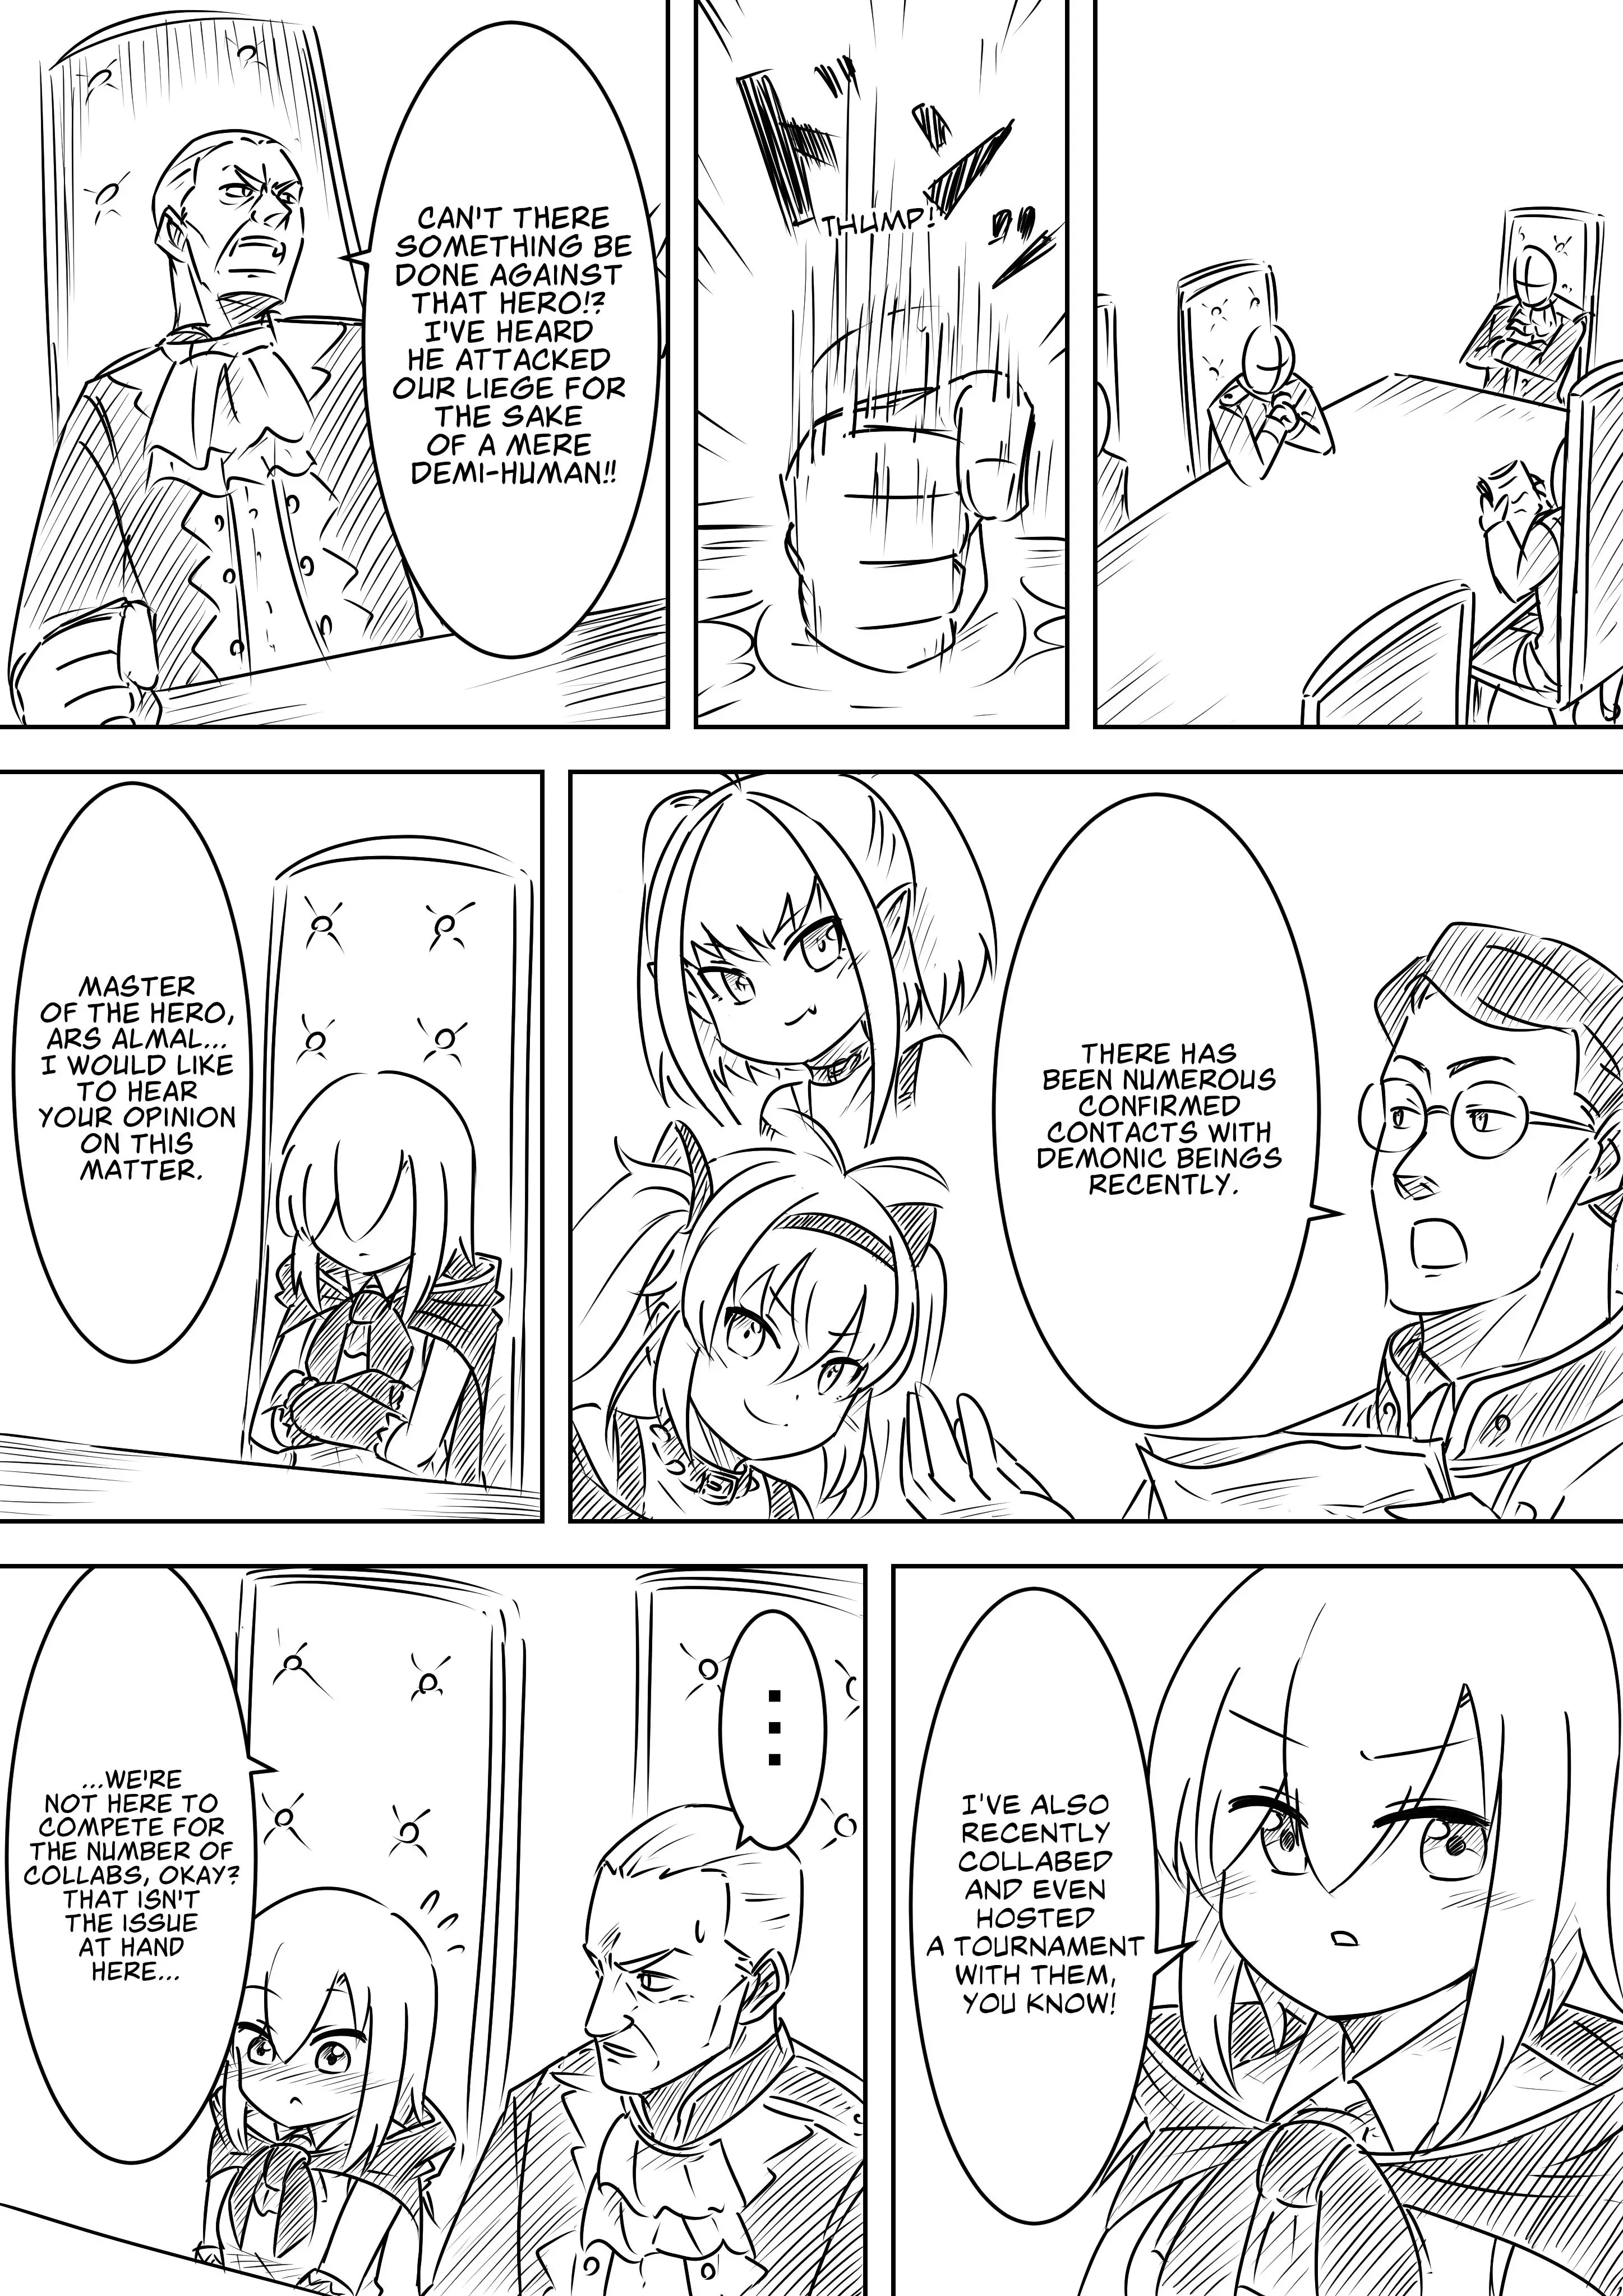 Ebimaru Misadventures (Webcomic) - 30 page 1-b0caff68